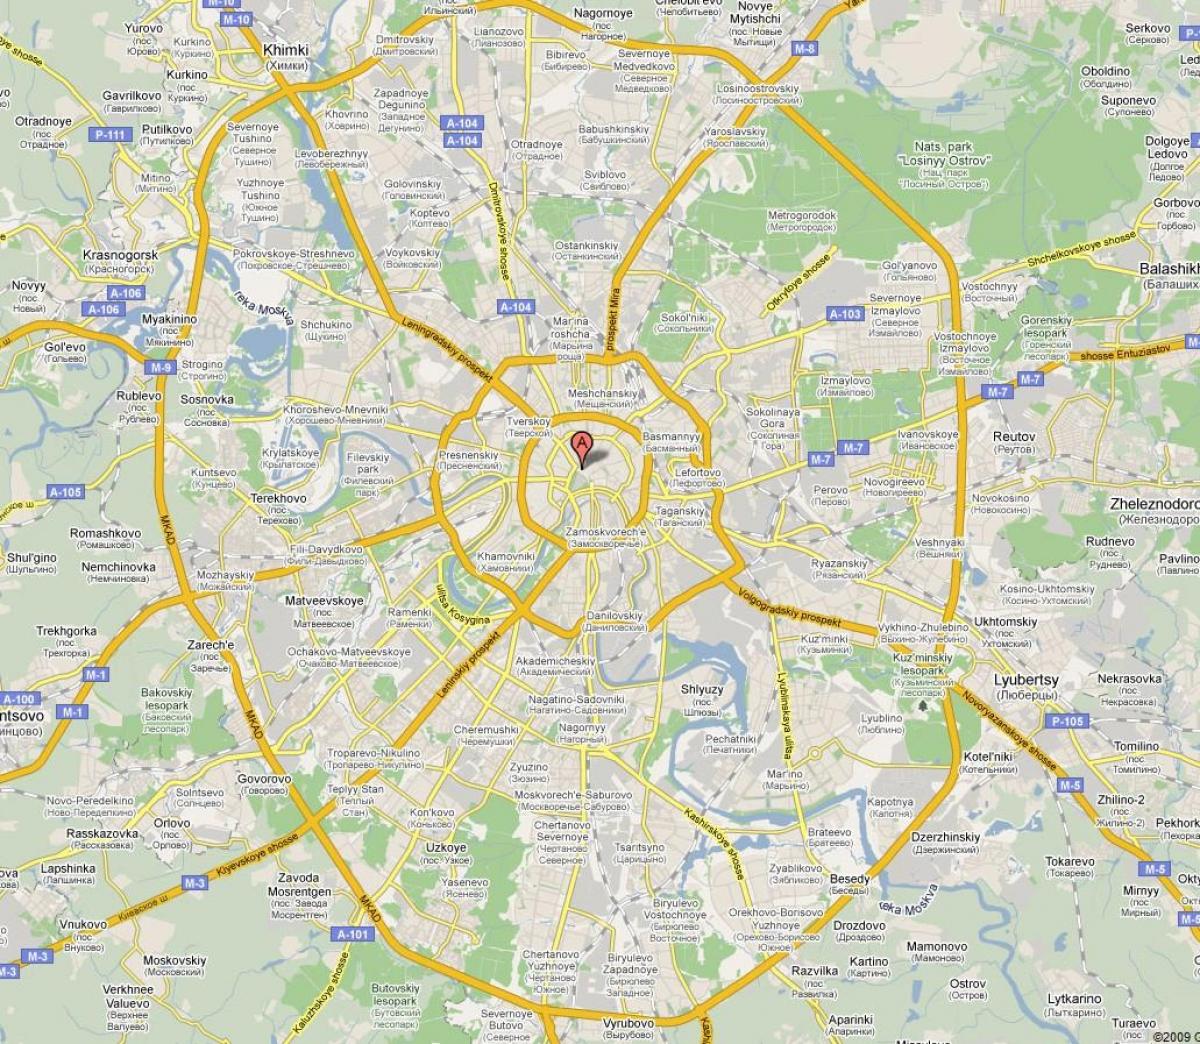 Moskva suburbio mapa